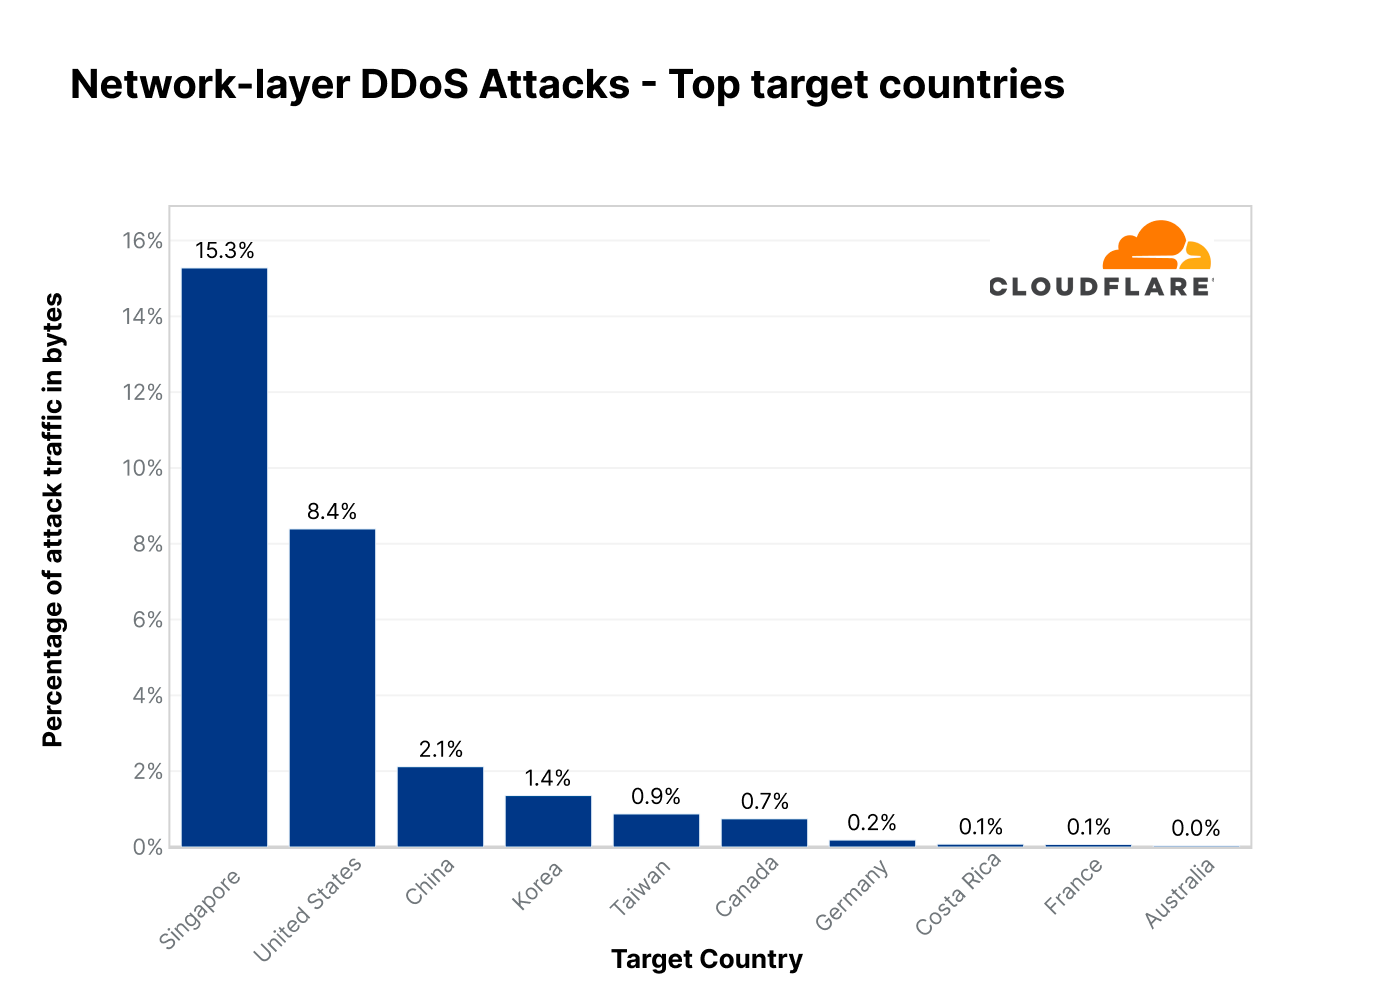 Battle.net DDoS Attack Causing High Latency and Login Queues - Wowhead News